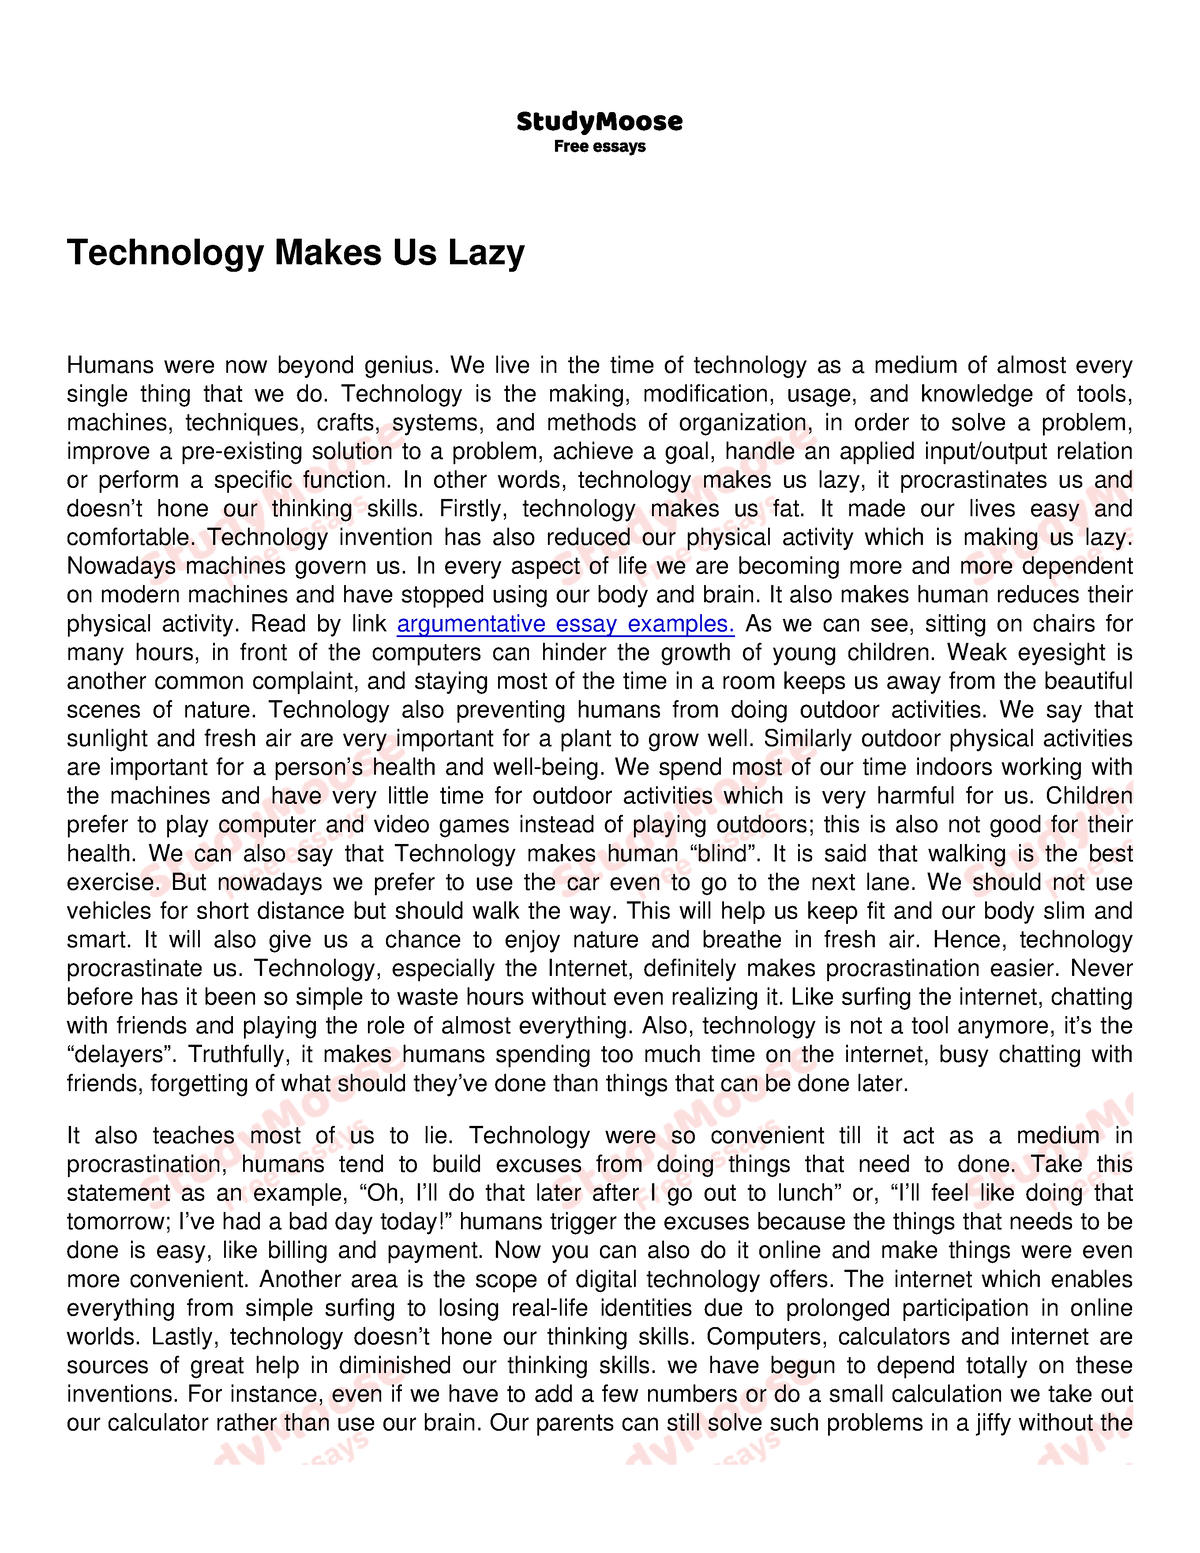 technology makes us lazy essay